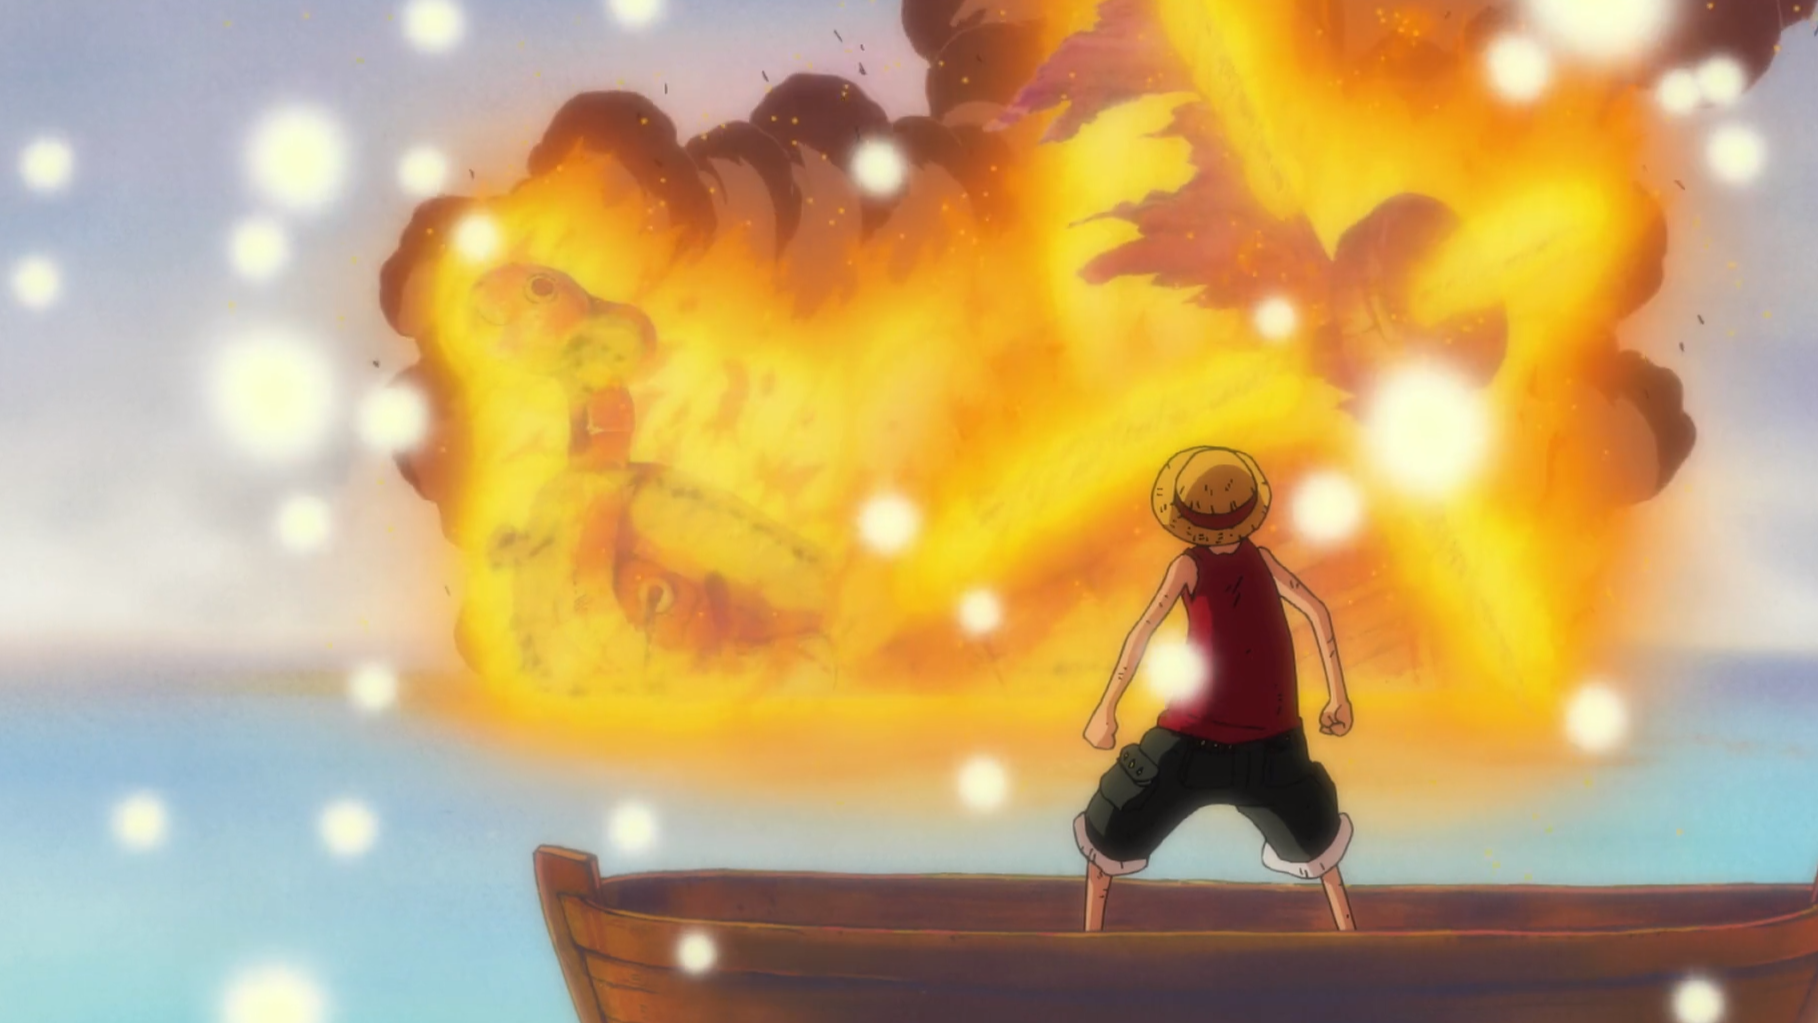 One Piece Enies Lobby Arc Luffy's Last Words